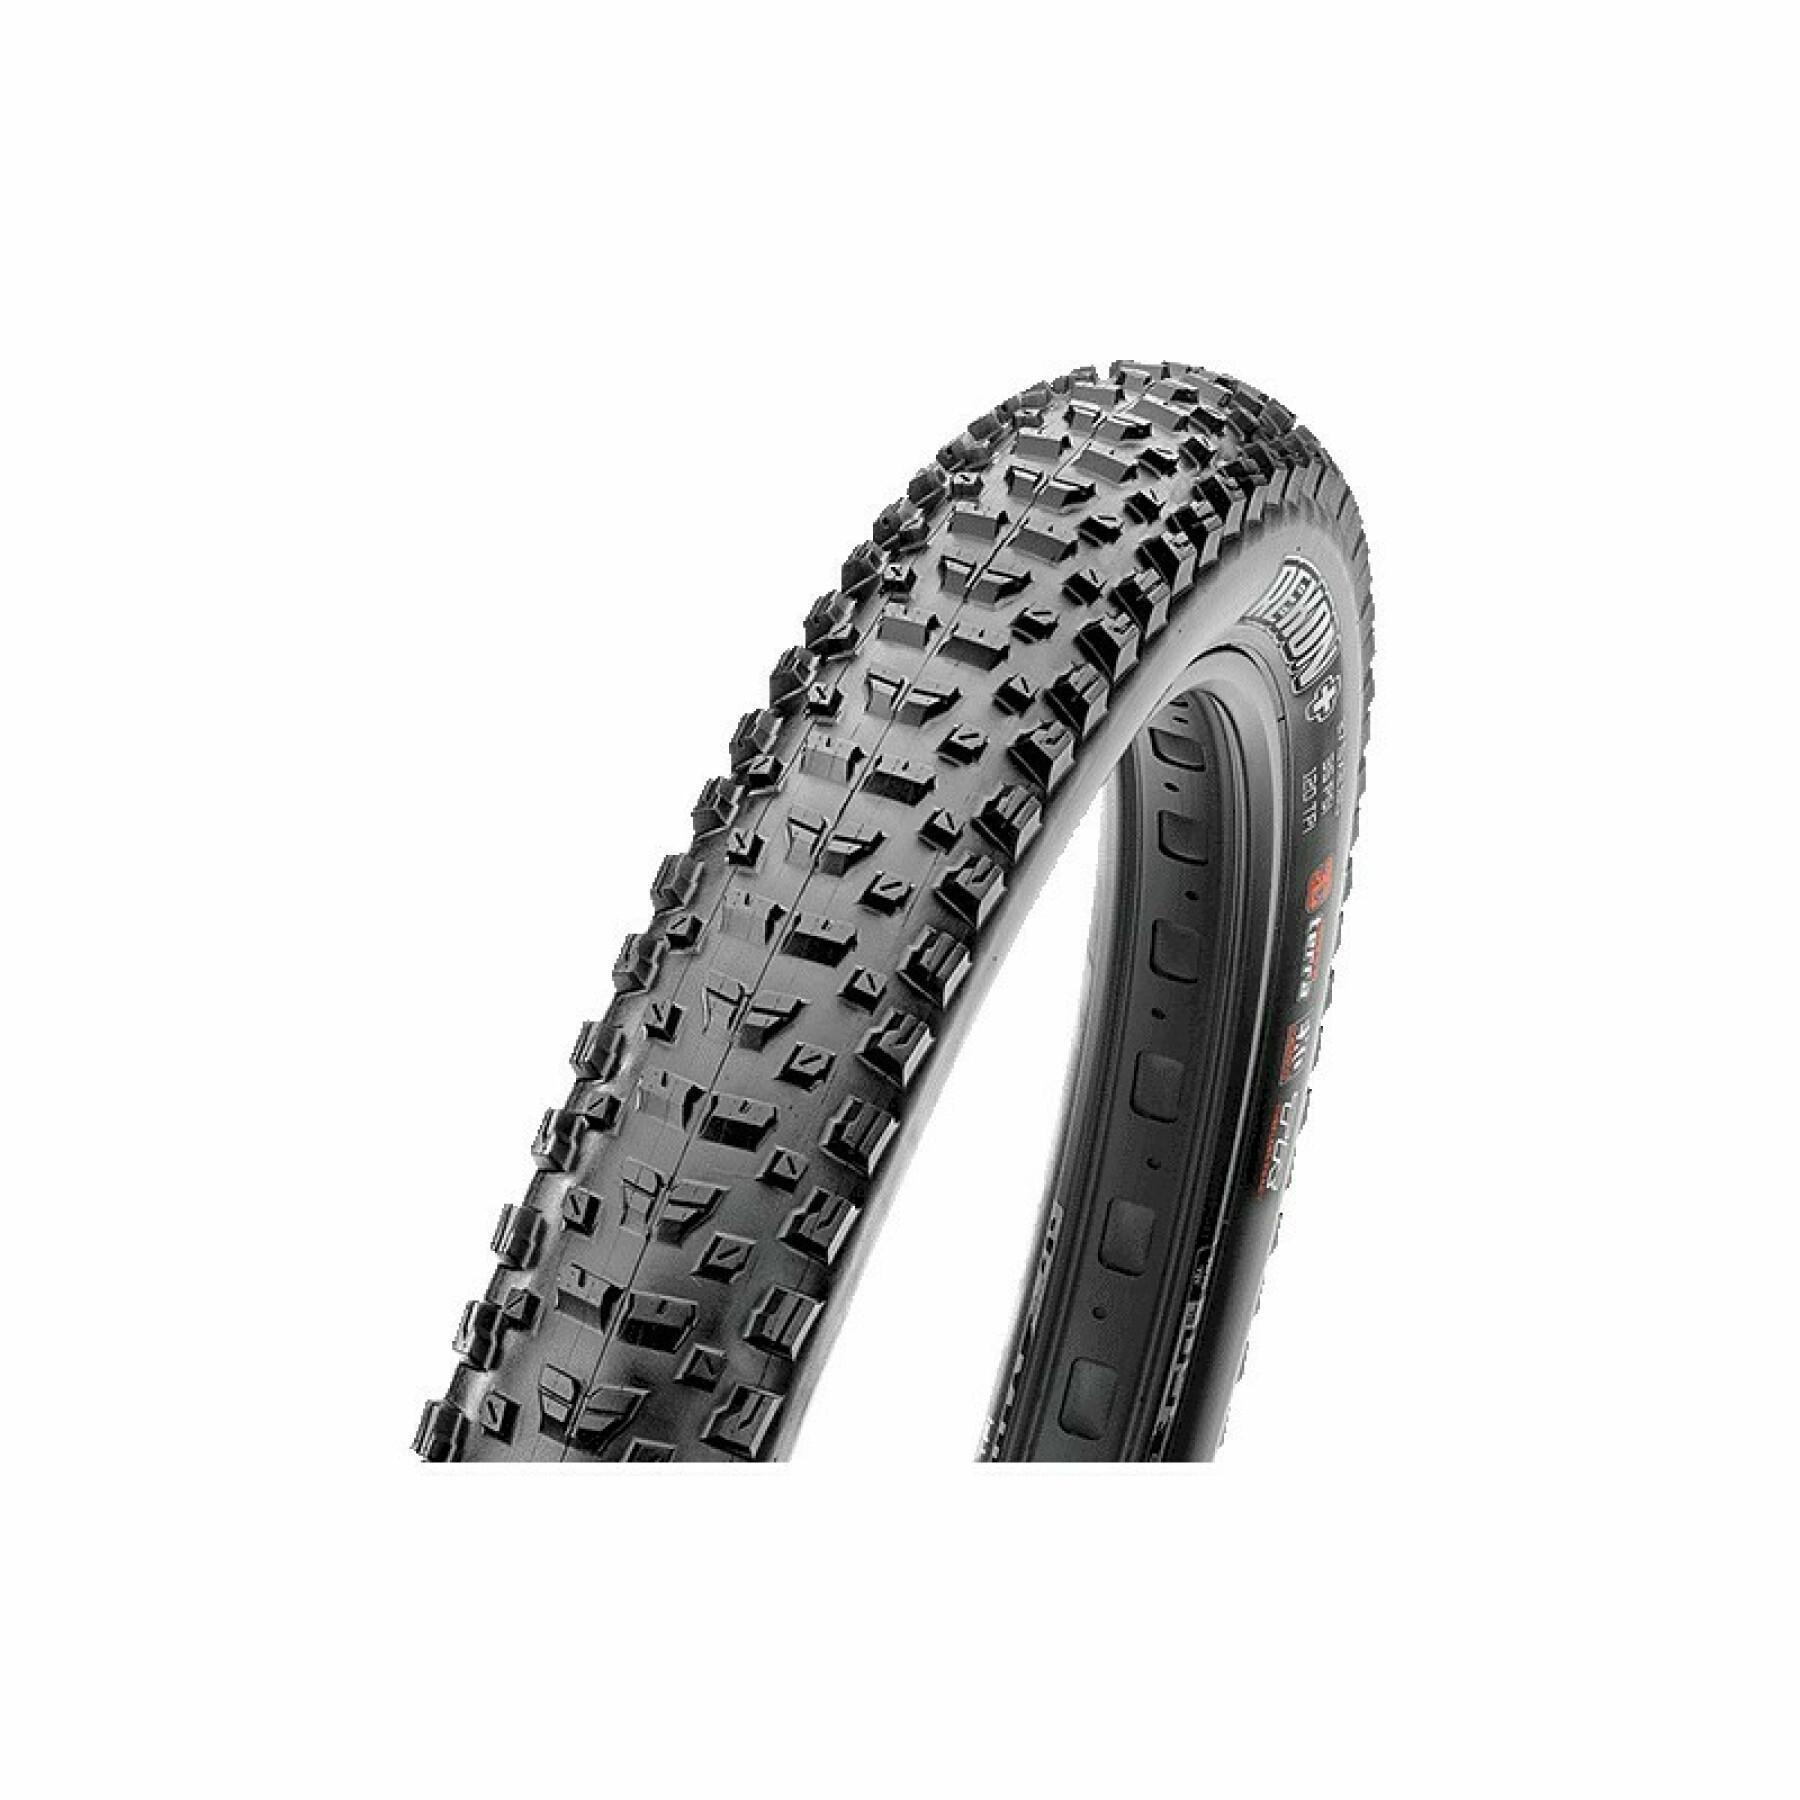 Soft tire Maxxis Rekon 29x2.60 Exo / Tubeless Ready